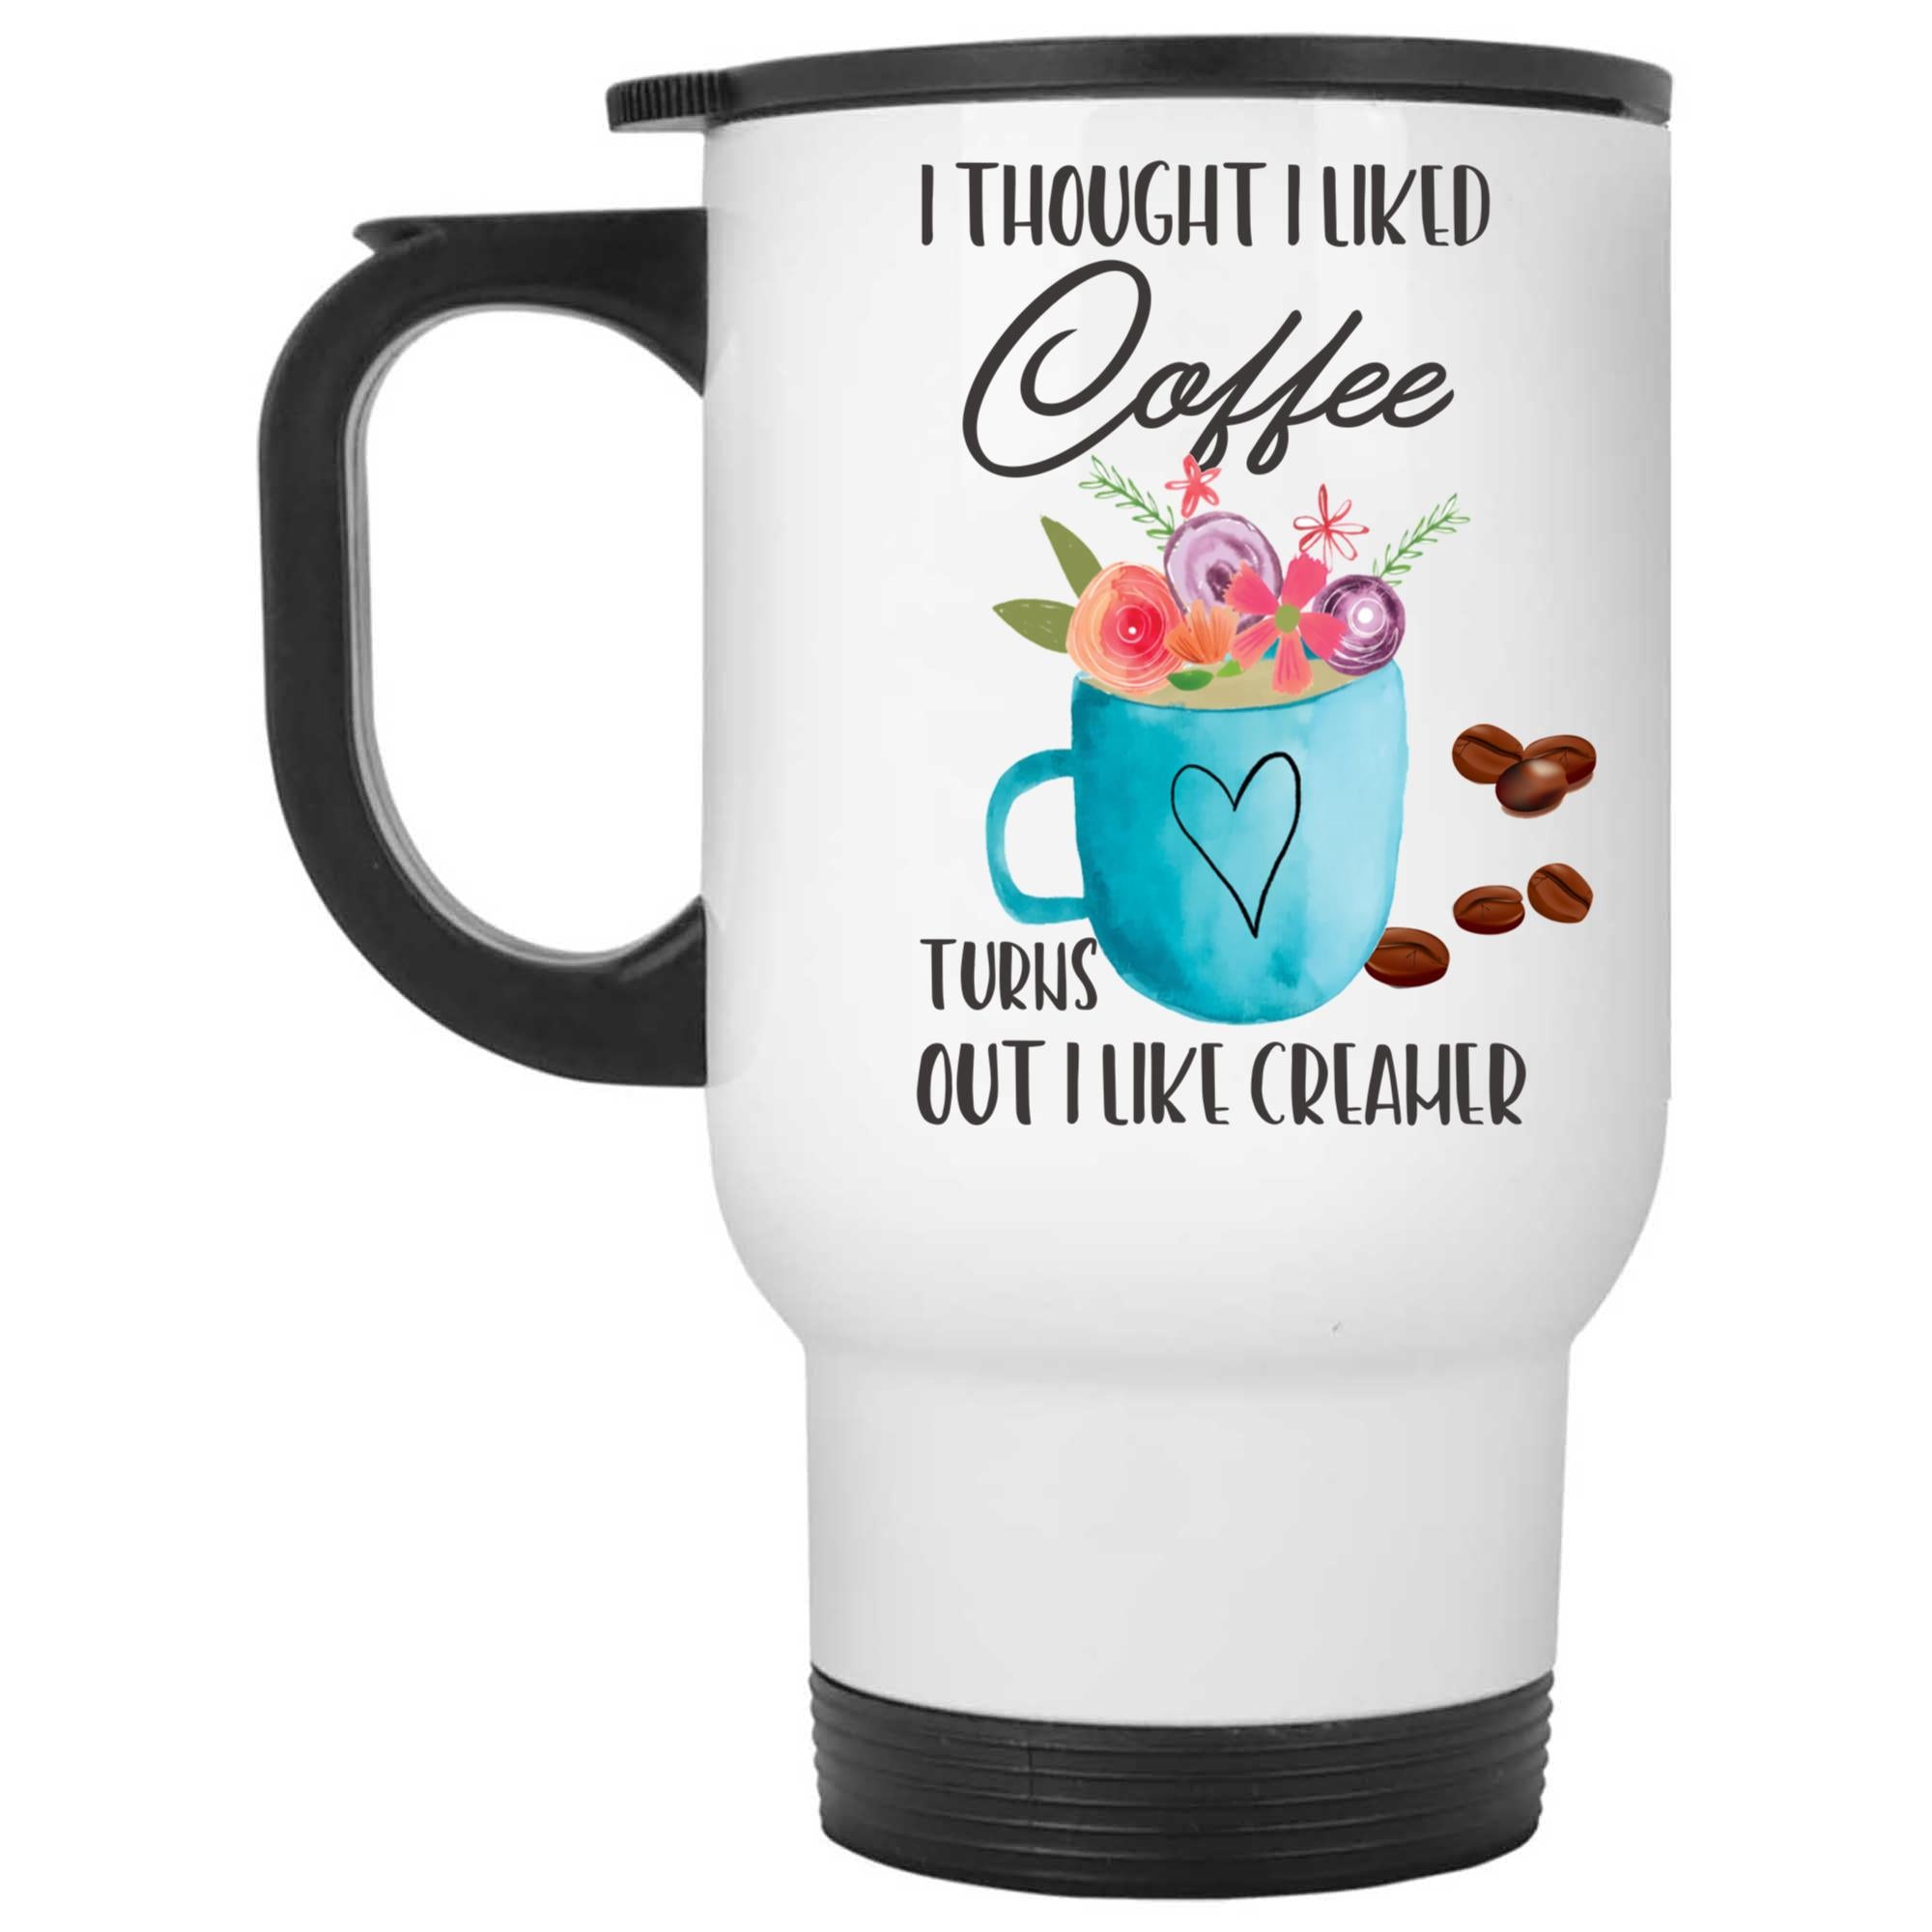 Skitongifts Funny Ceramic Coffee Mug Novelty M21-Nh161221- I Thought I Liked Coffee Turns Out I Like Creamer L1Tp7Mc